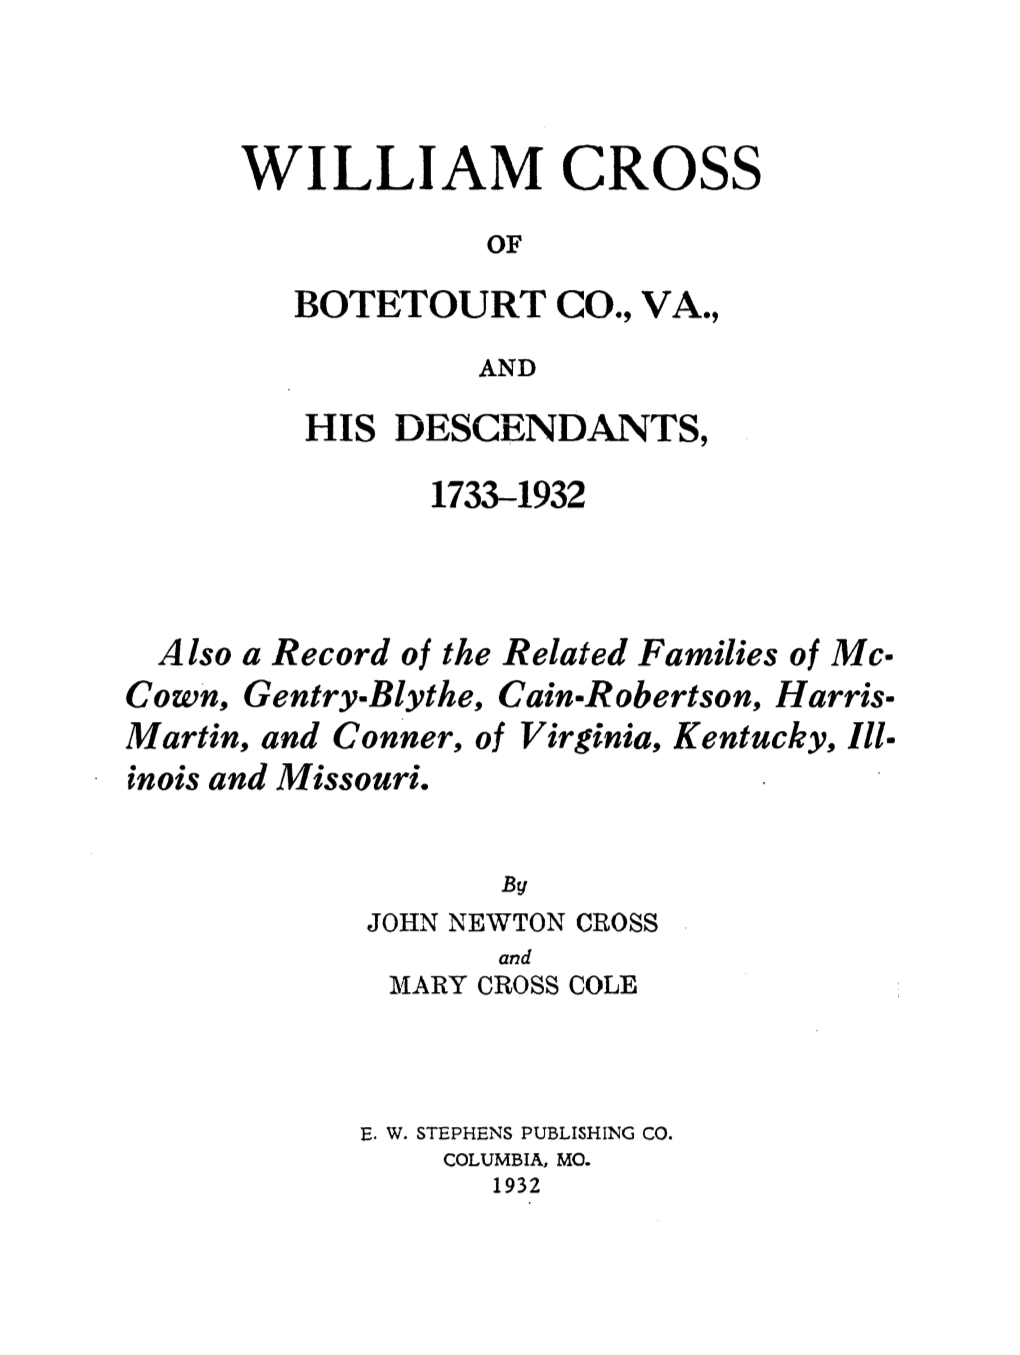 William Cross of Botetourt Co., Va